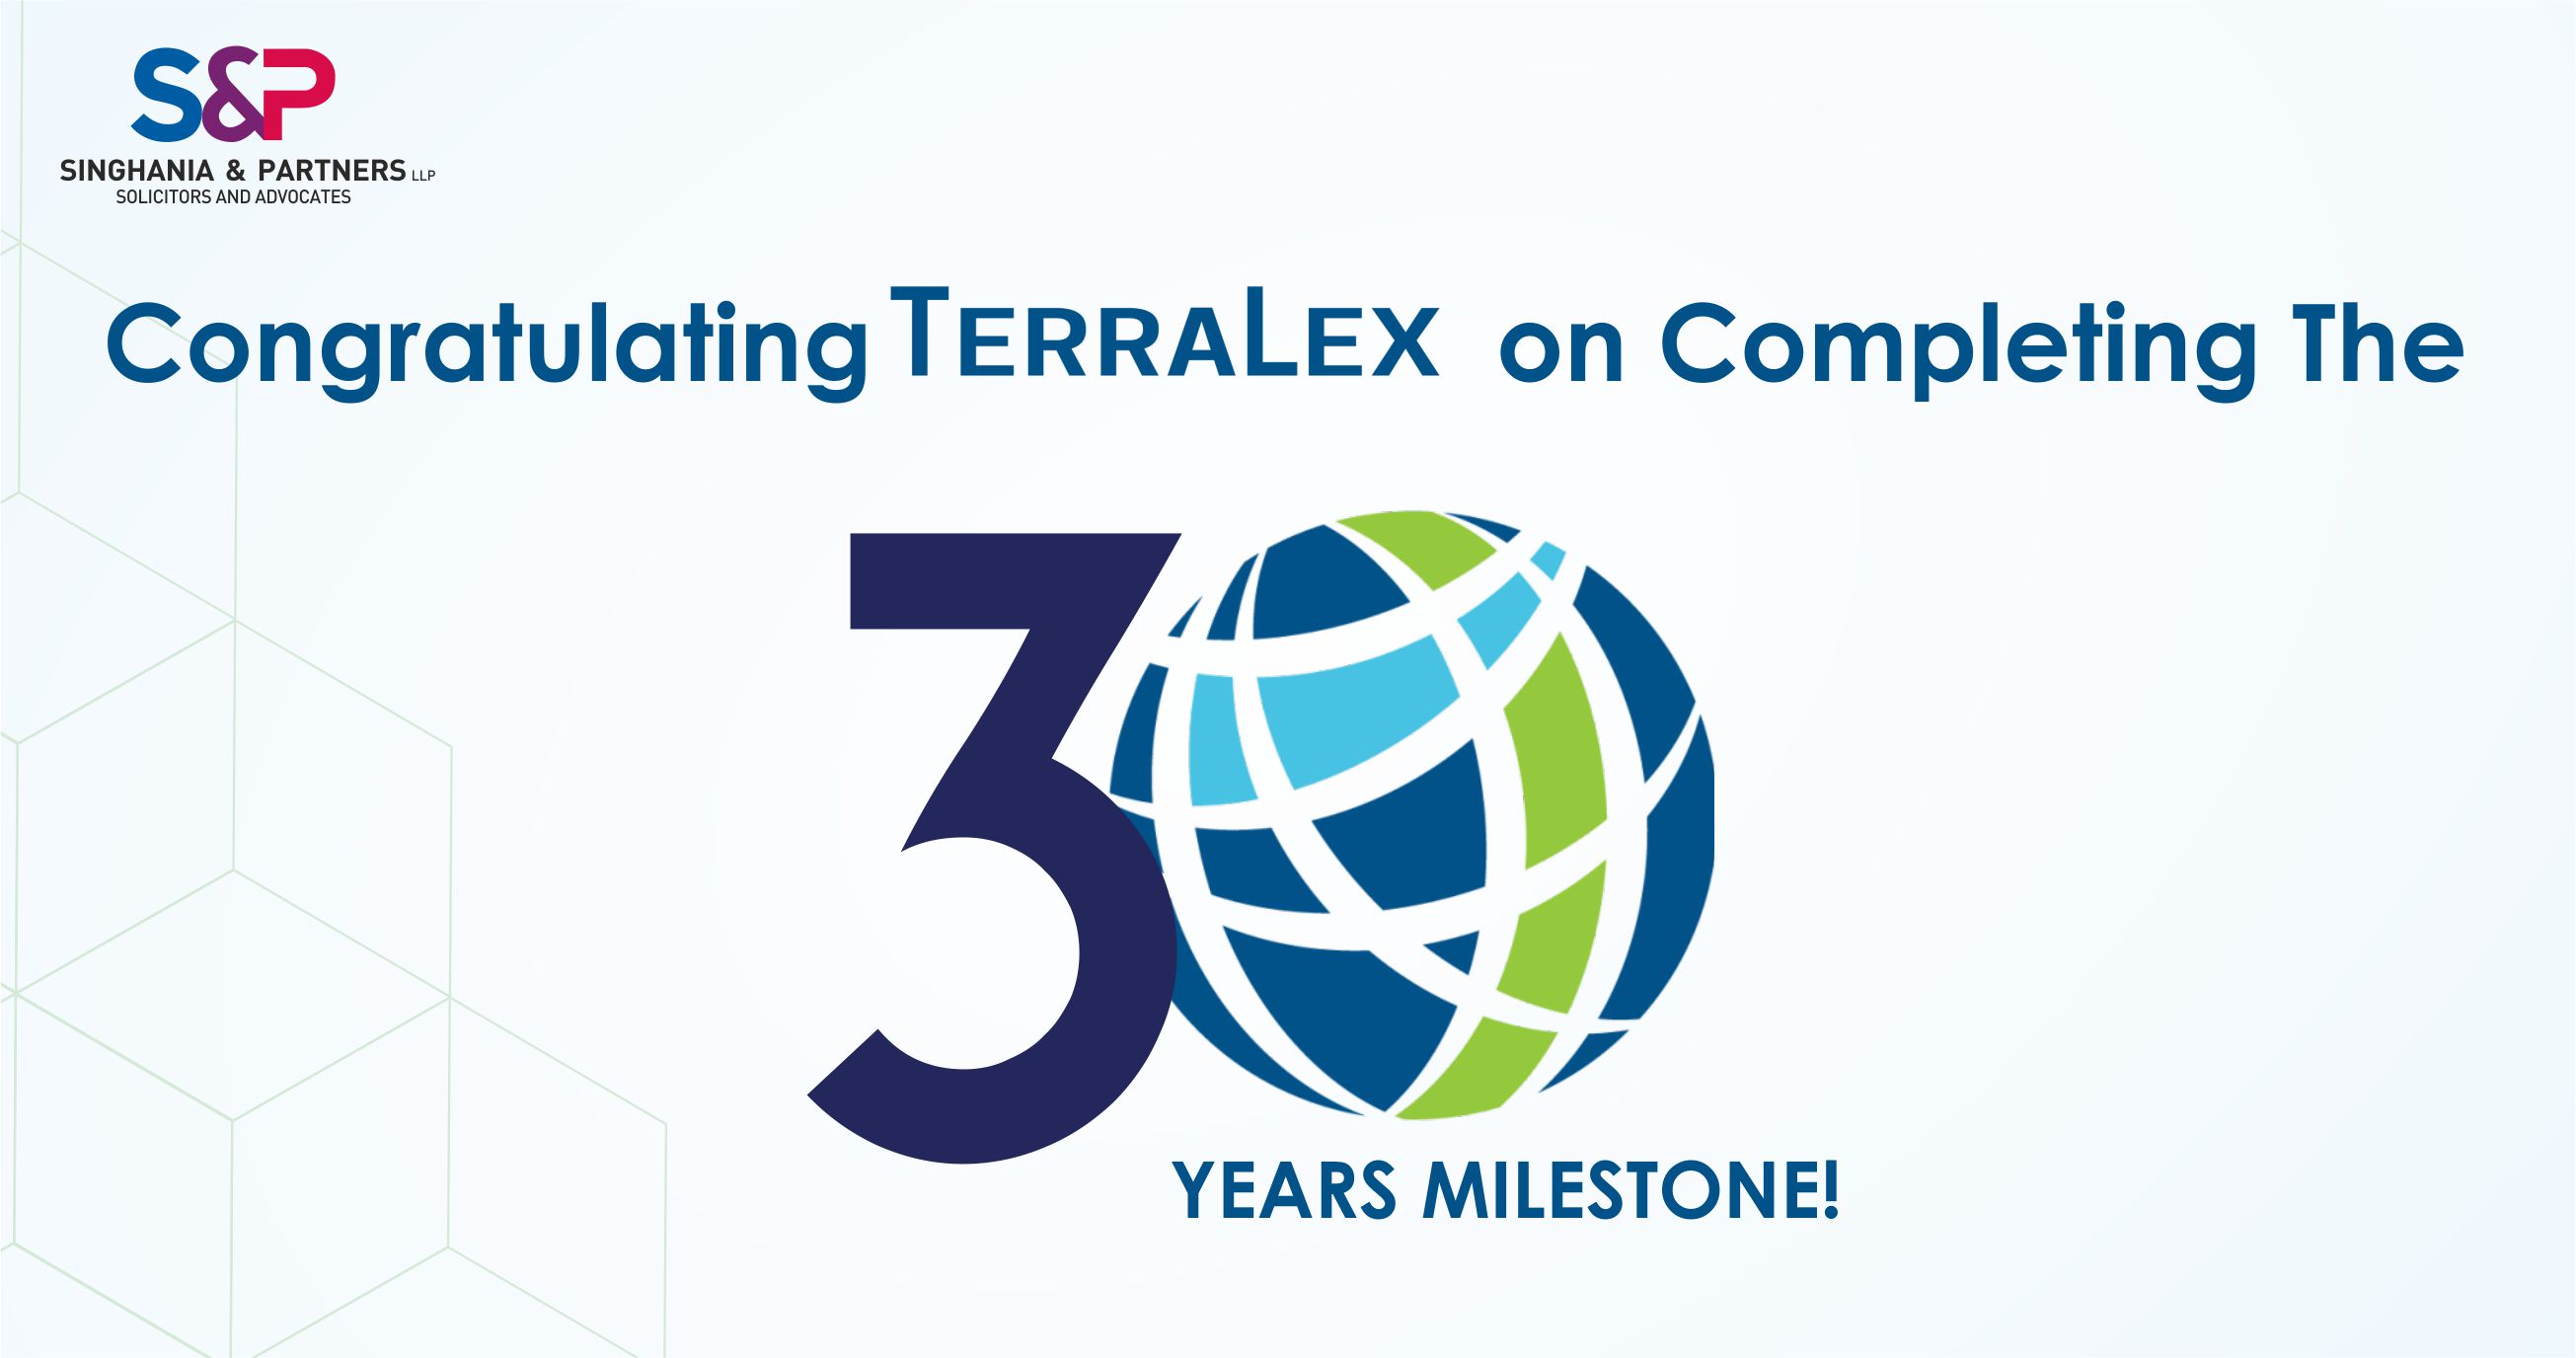 Celebrating 30 years of Terralex